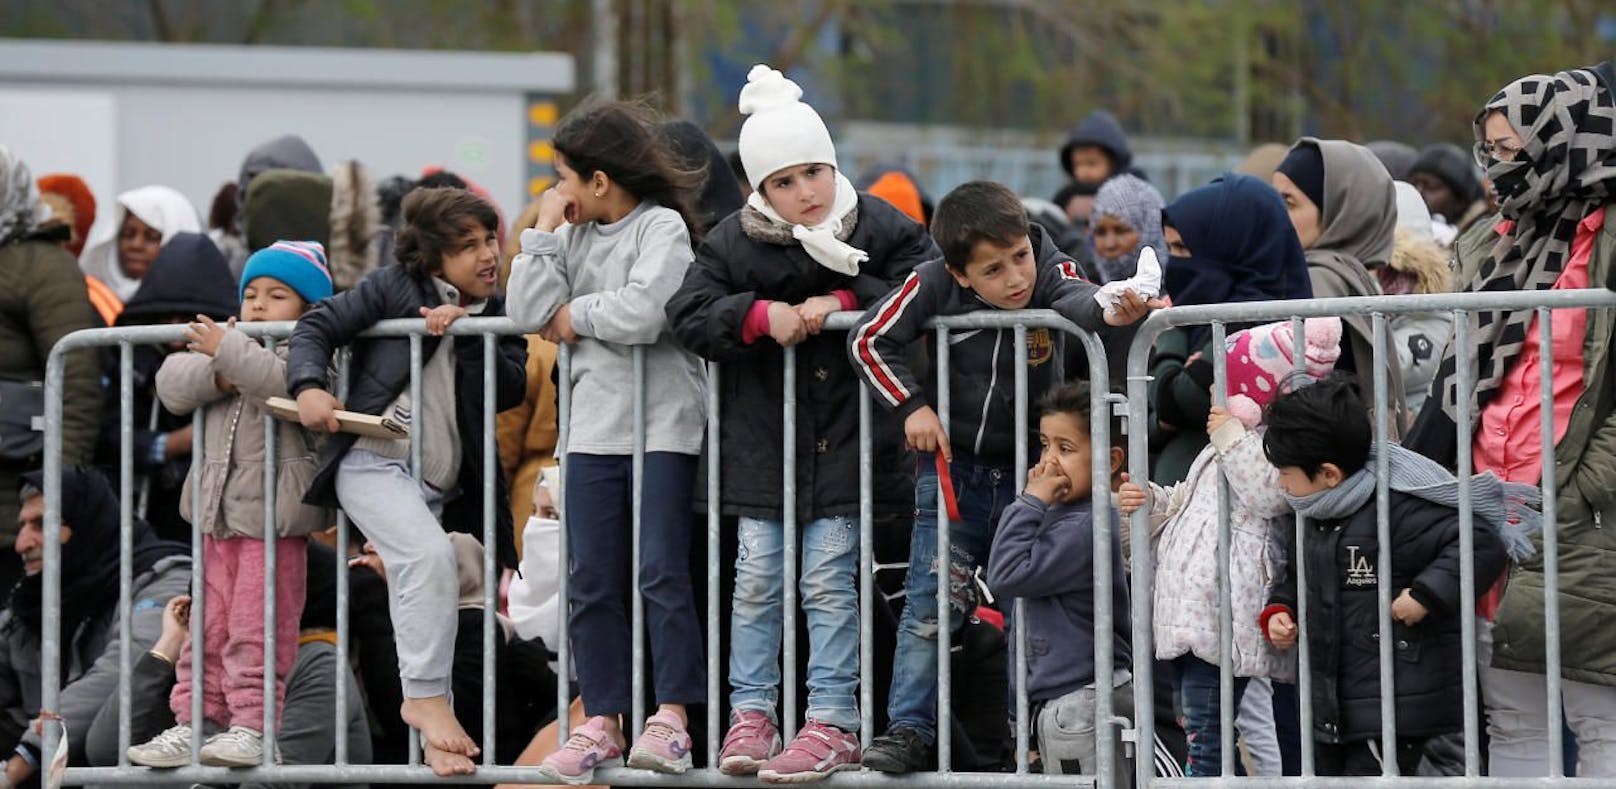 Corona: Evakuierung der EU-Flüchtlingslager gefordert